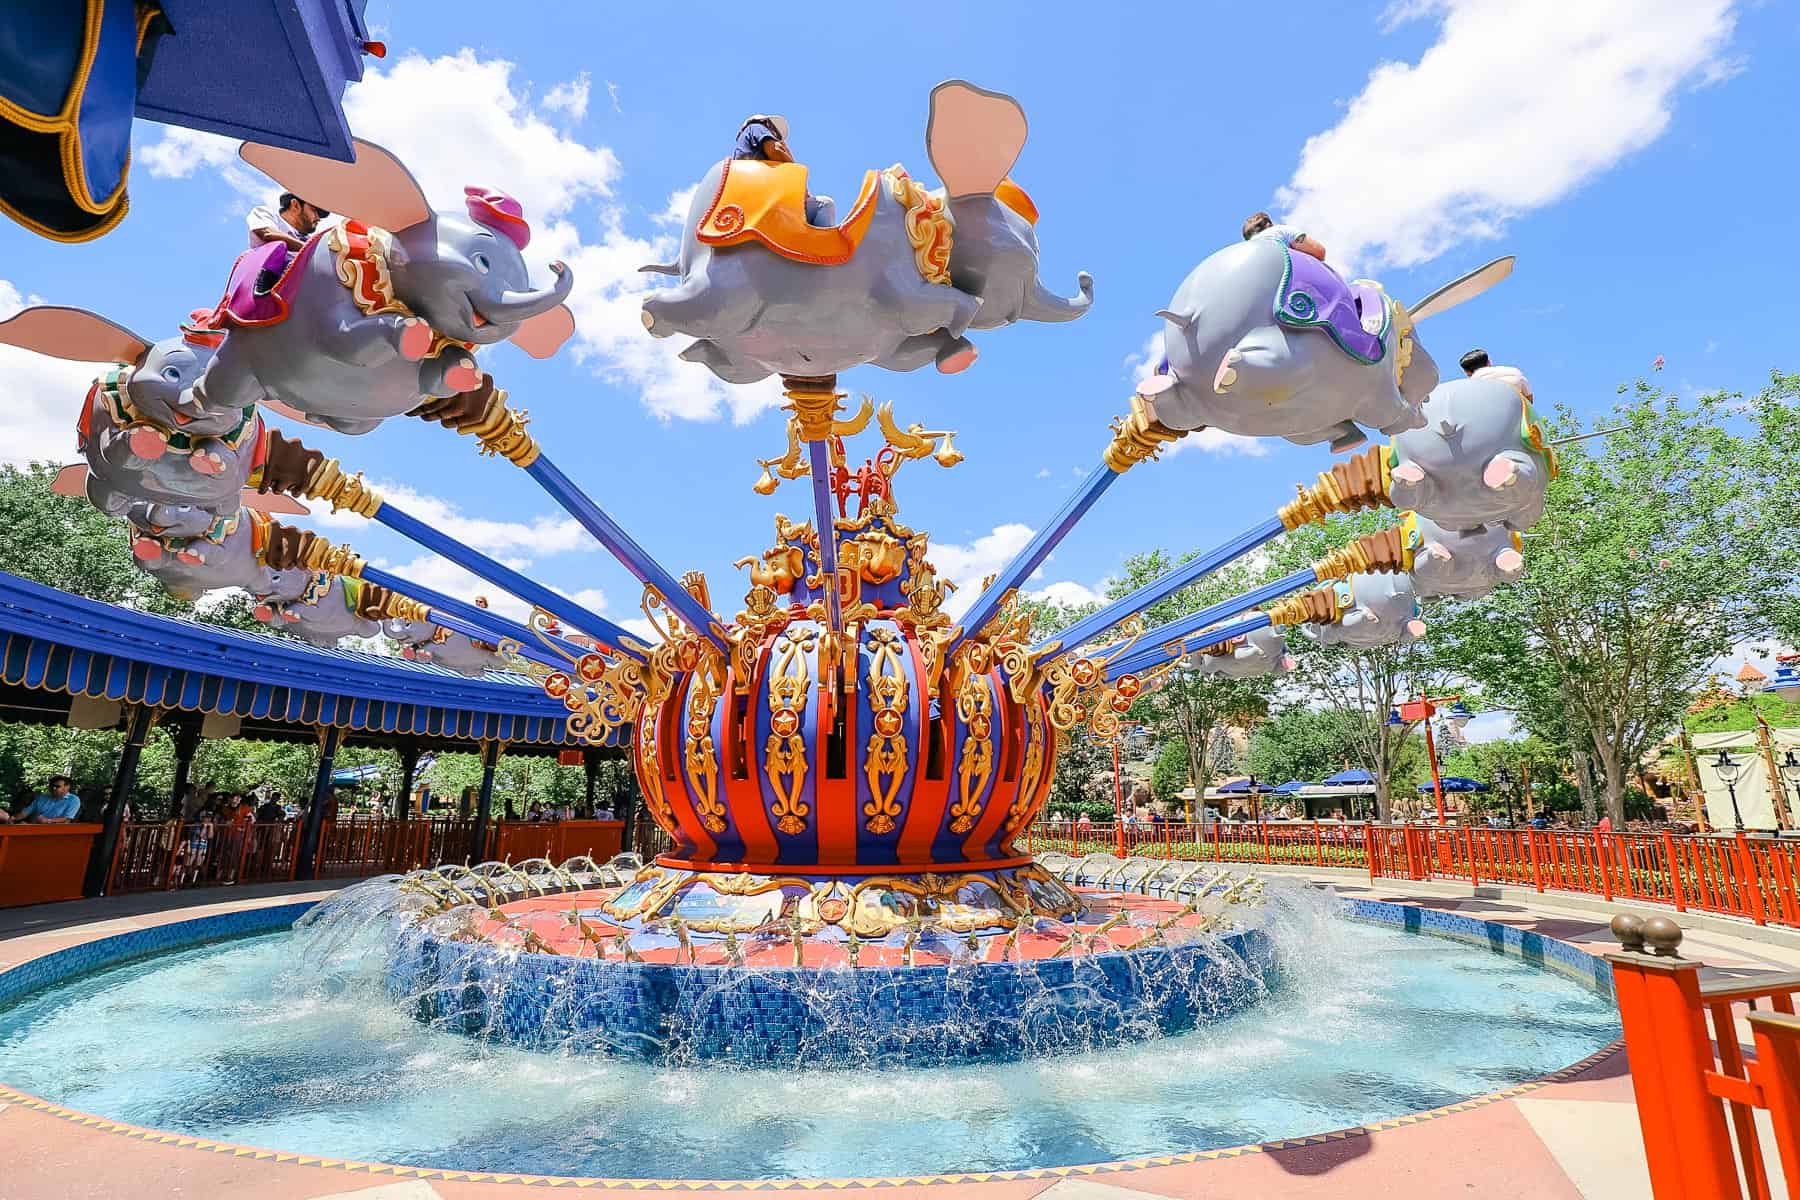 Dumbo, The Flying Elephant at Walt Disney World (Ride Guide)